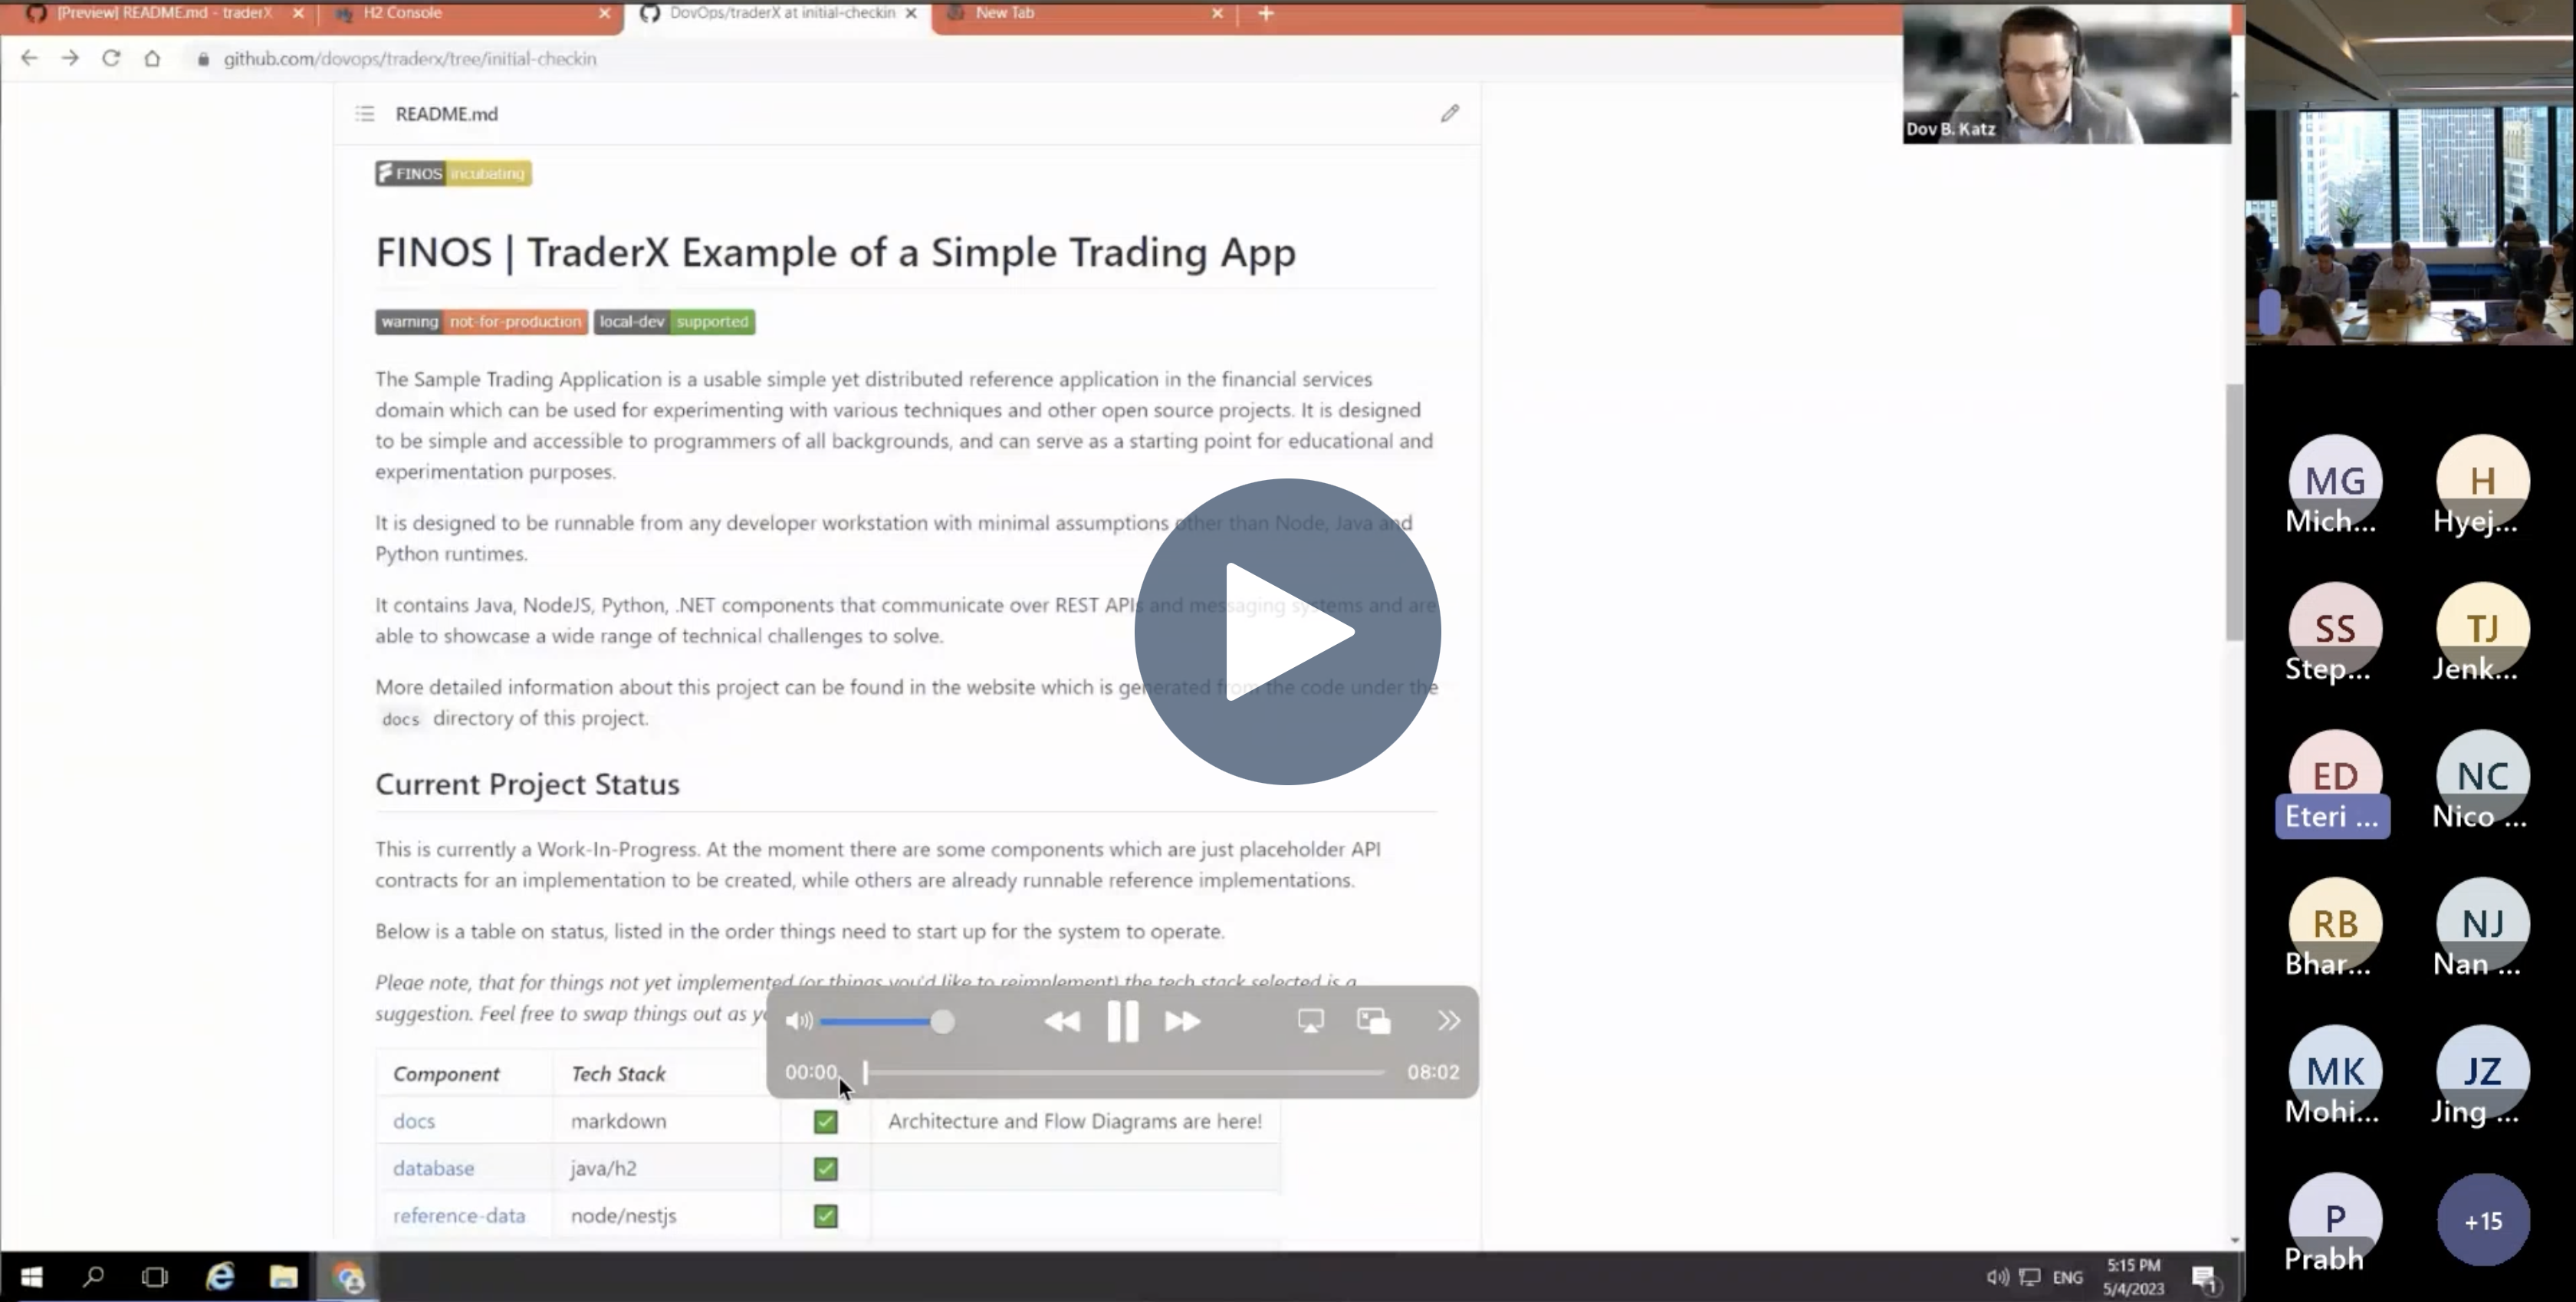 TraderX Example of a Simple Trading App - Dov Katz (Morgan Stanley)